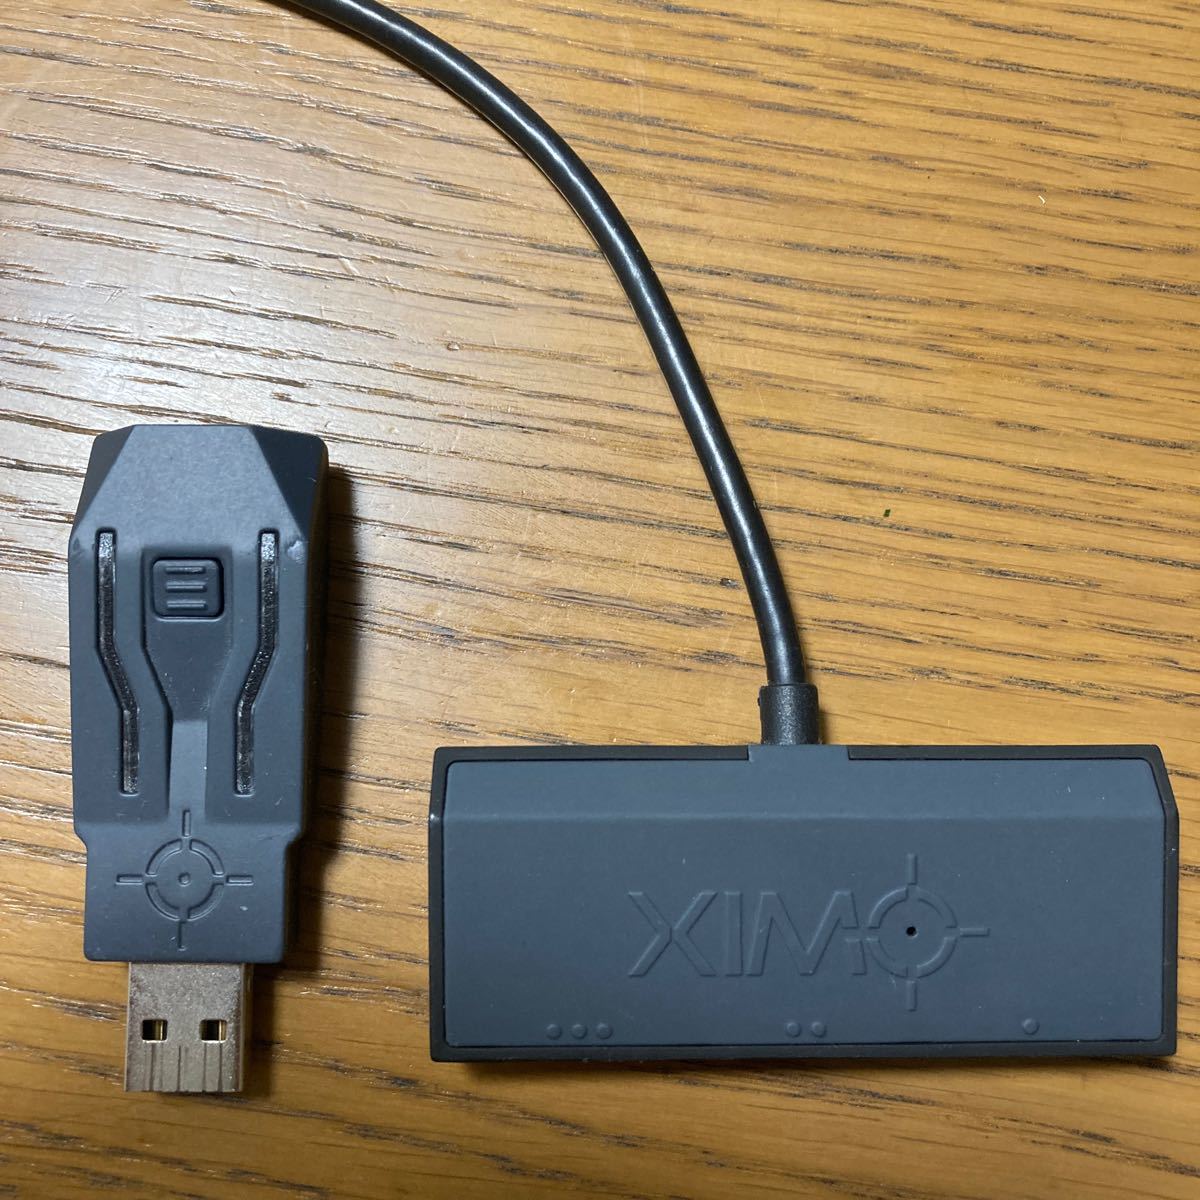 XIM APEX PS4 コンバーター